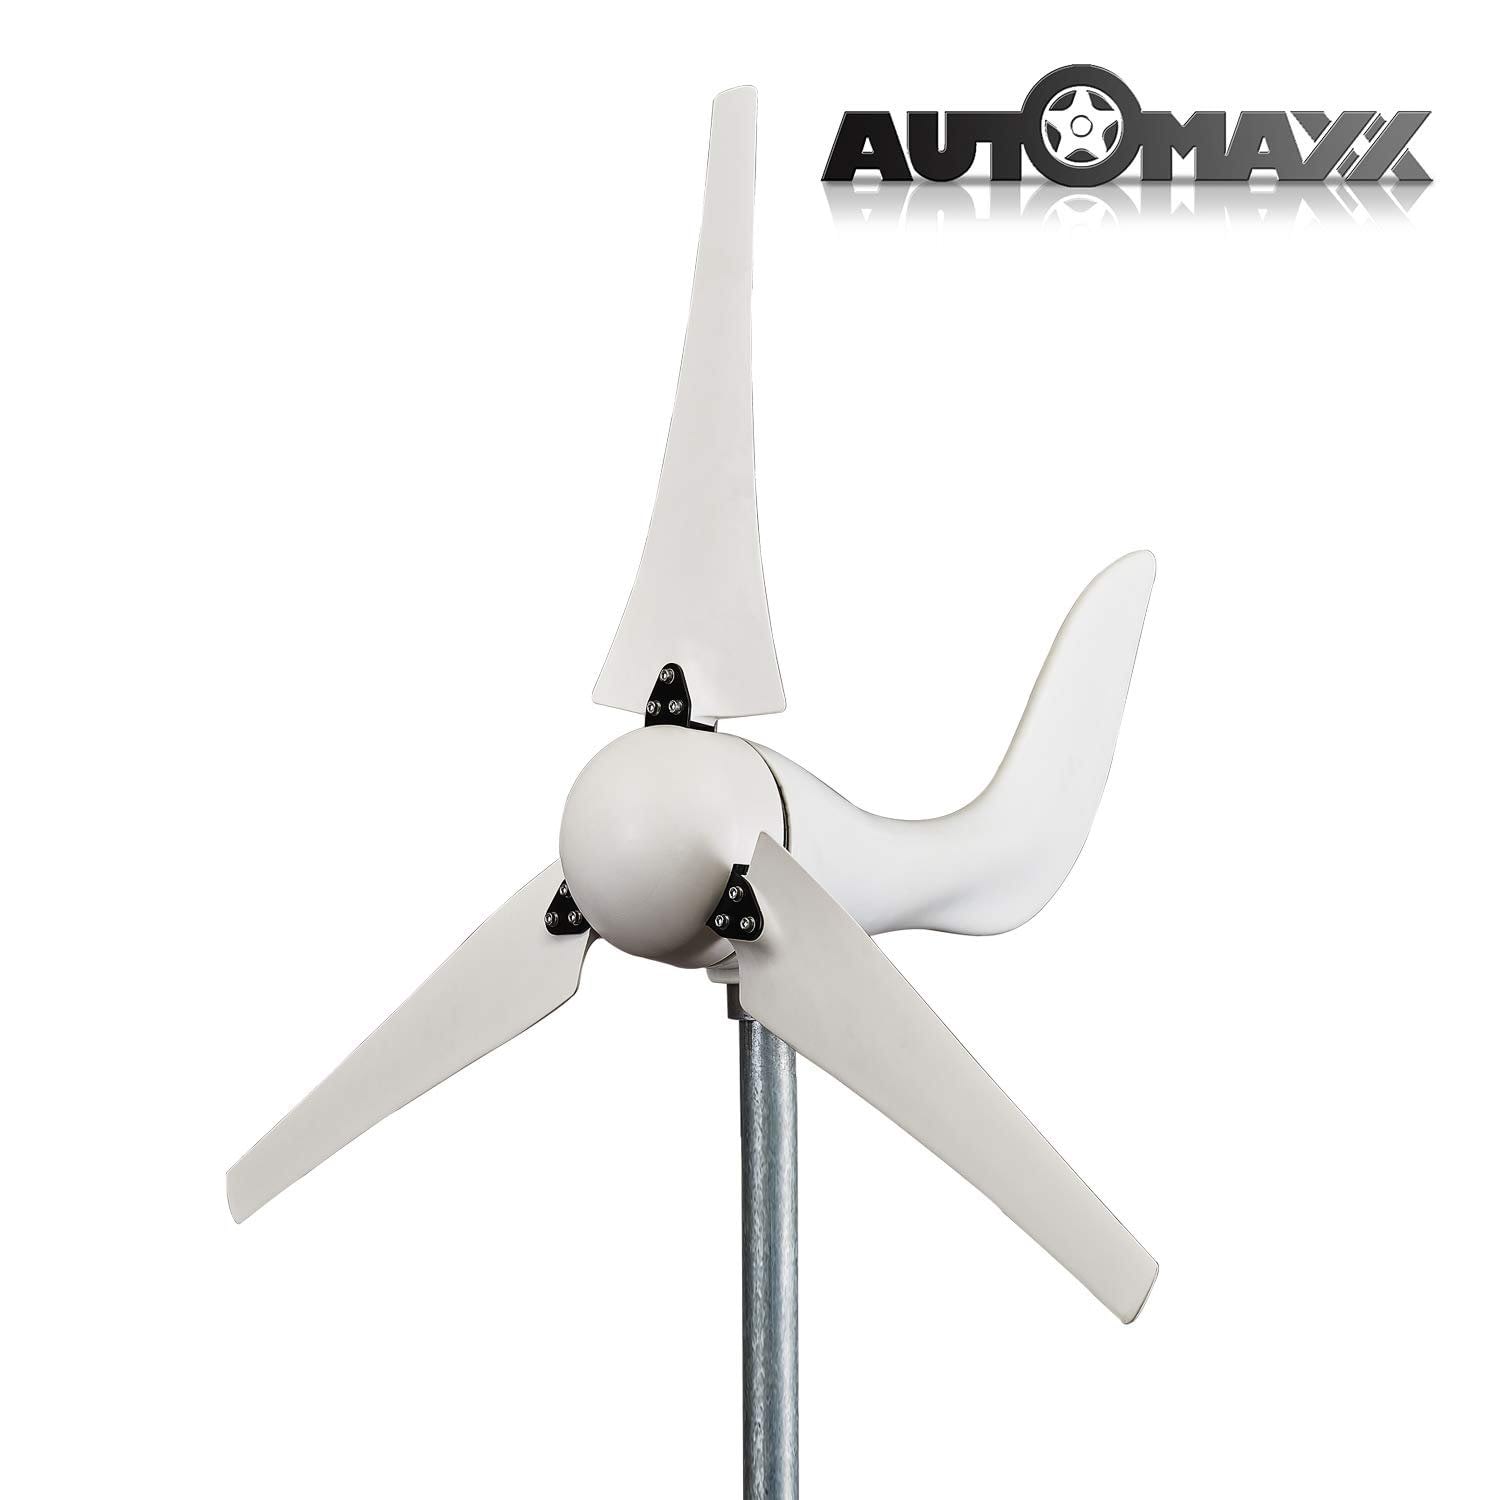 automaxx-cheap-wind-turbine-review